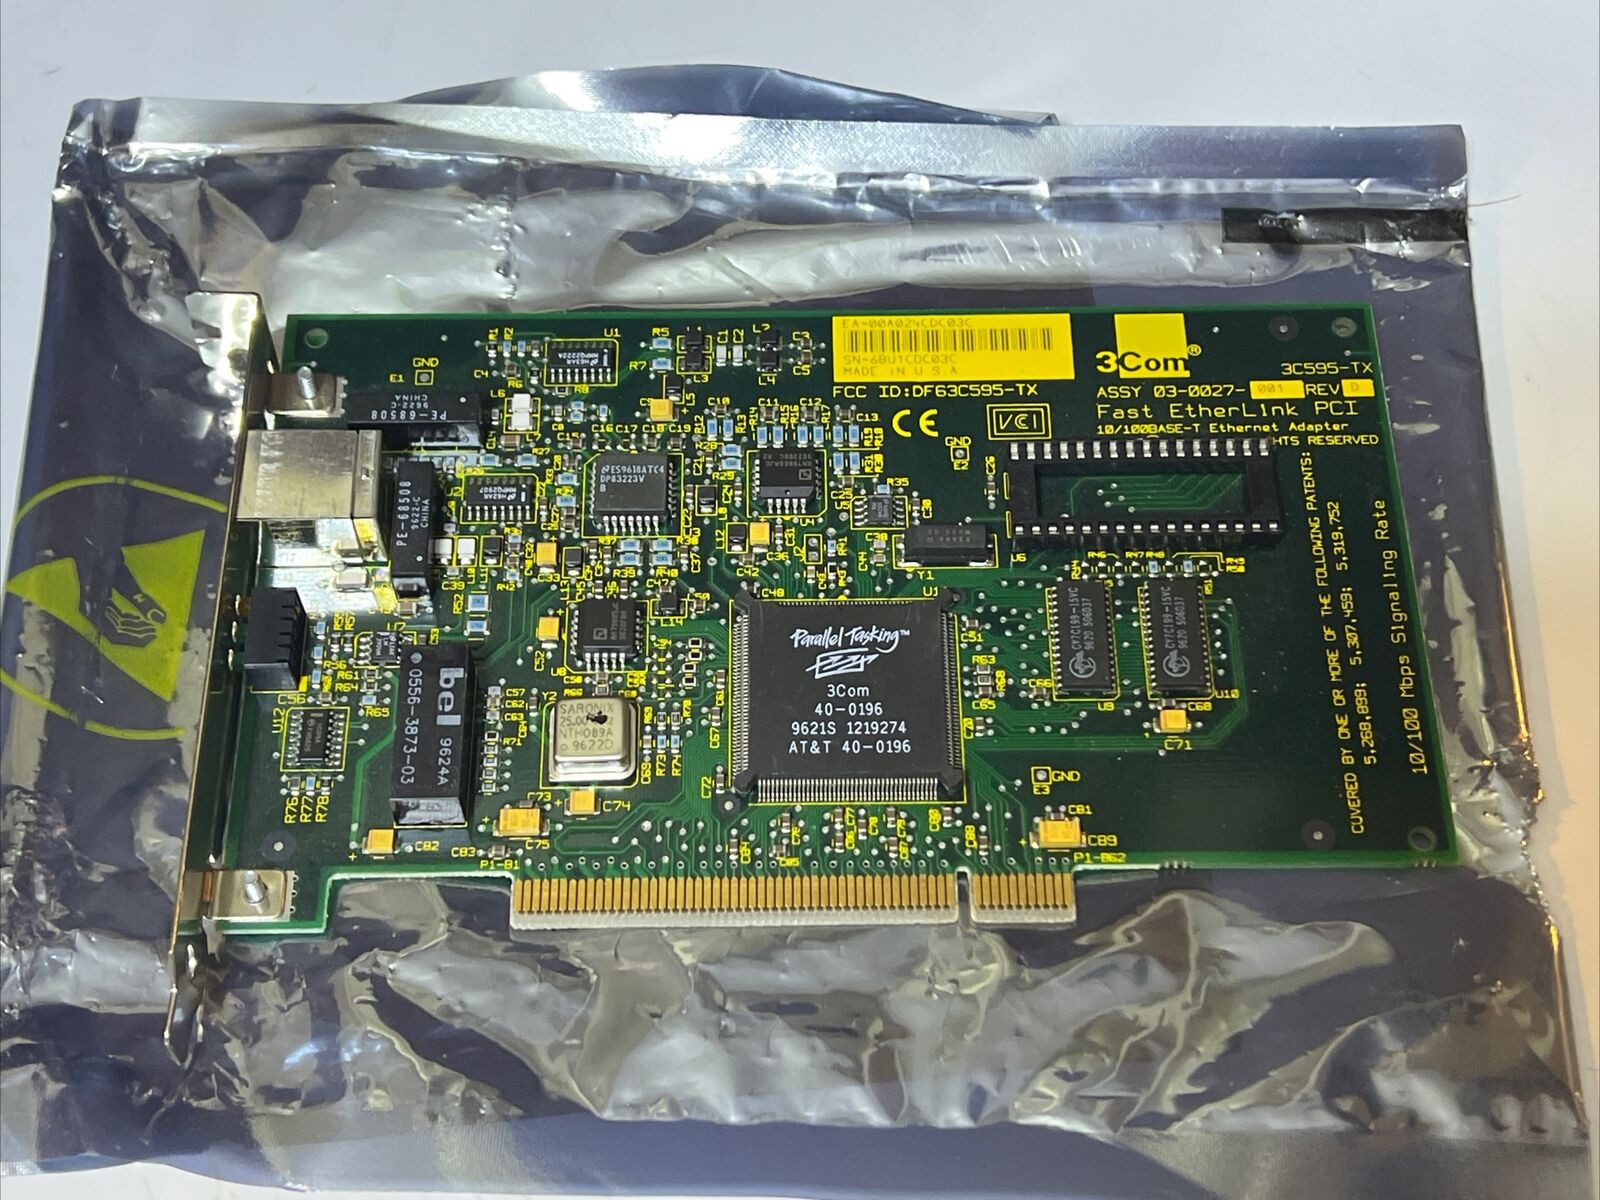 3COM FAST ETHERLINK PCI 10/100 BASE-T ETHERNET ADAPTER 3C595-TX 03-0027-001